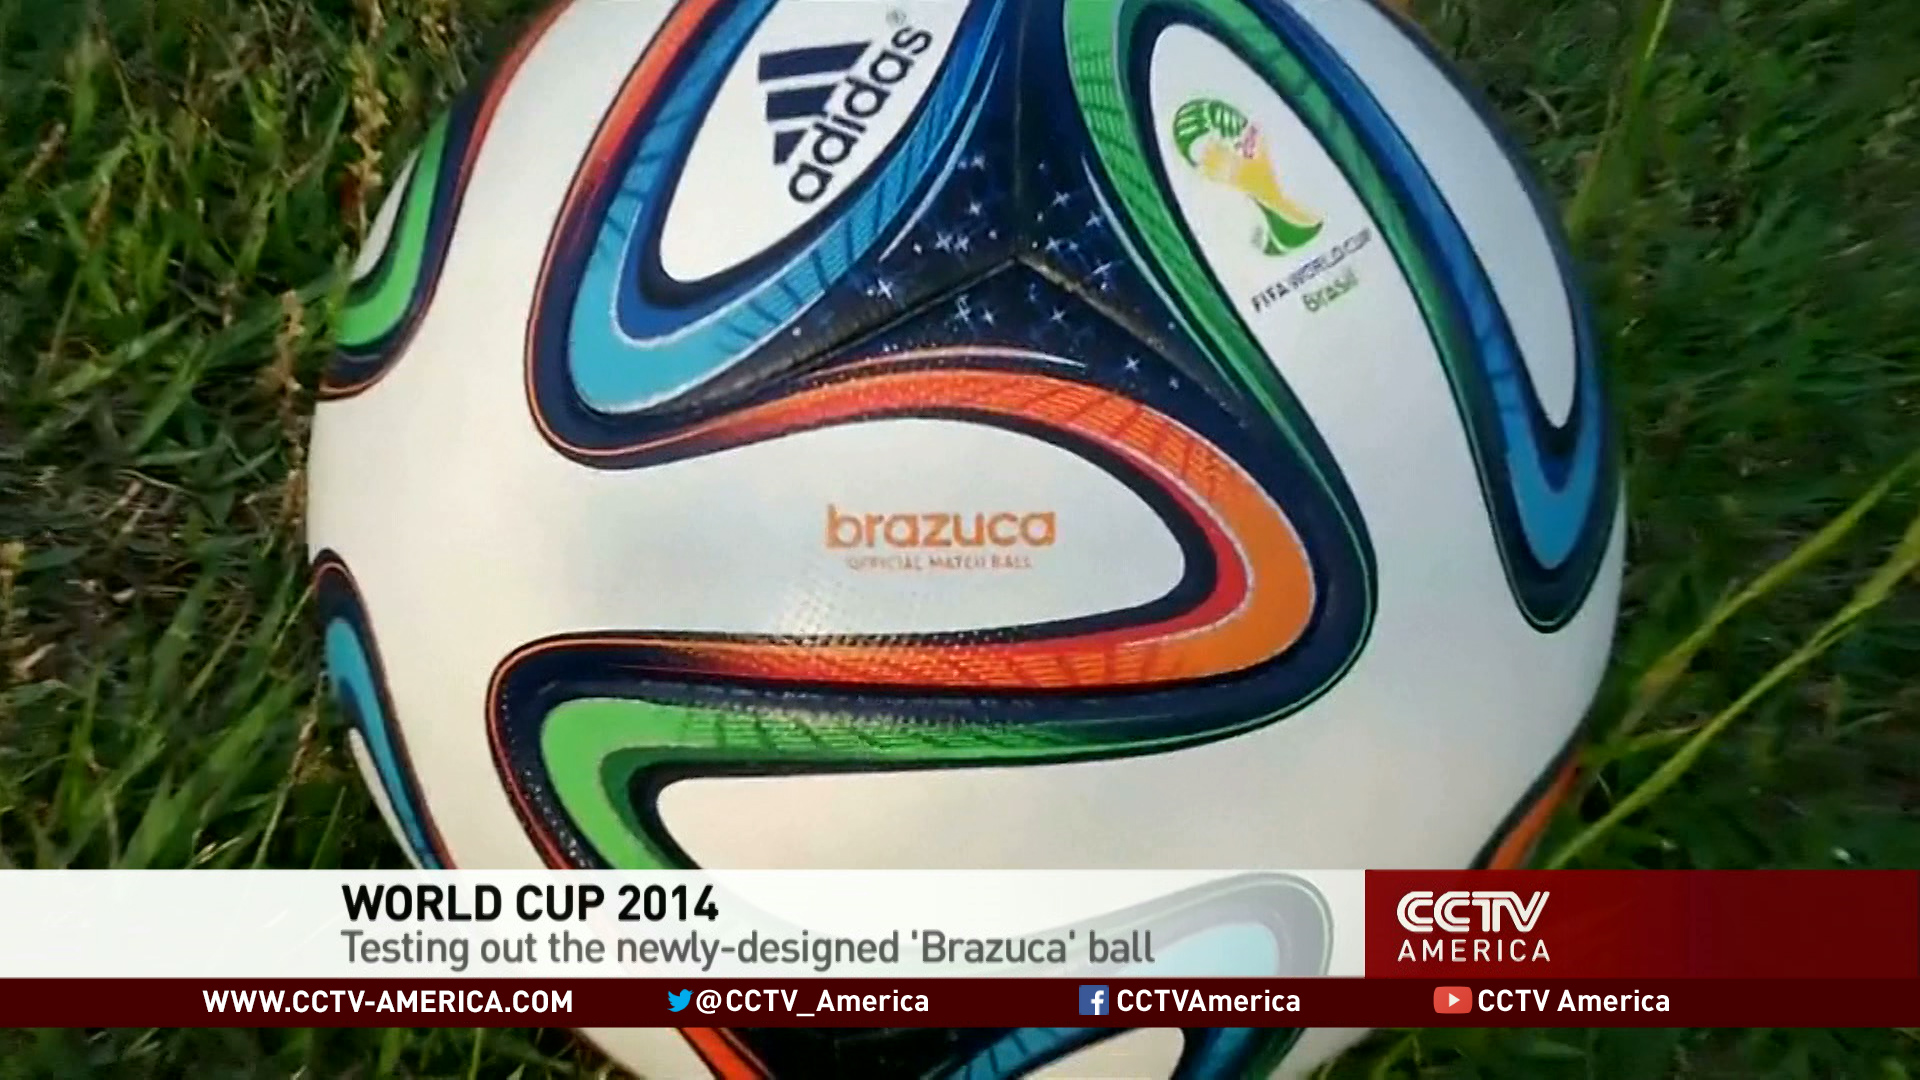 https://america.cgtn.com/wp-content/uploads/2014/06/Adidas-brings-Brazuca-ball-to-FIFA-World-Cup.Still001.jpg